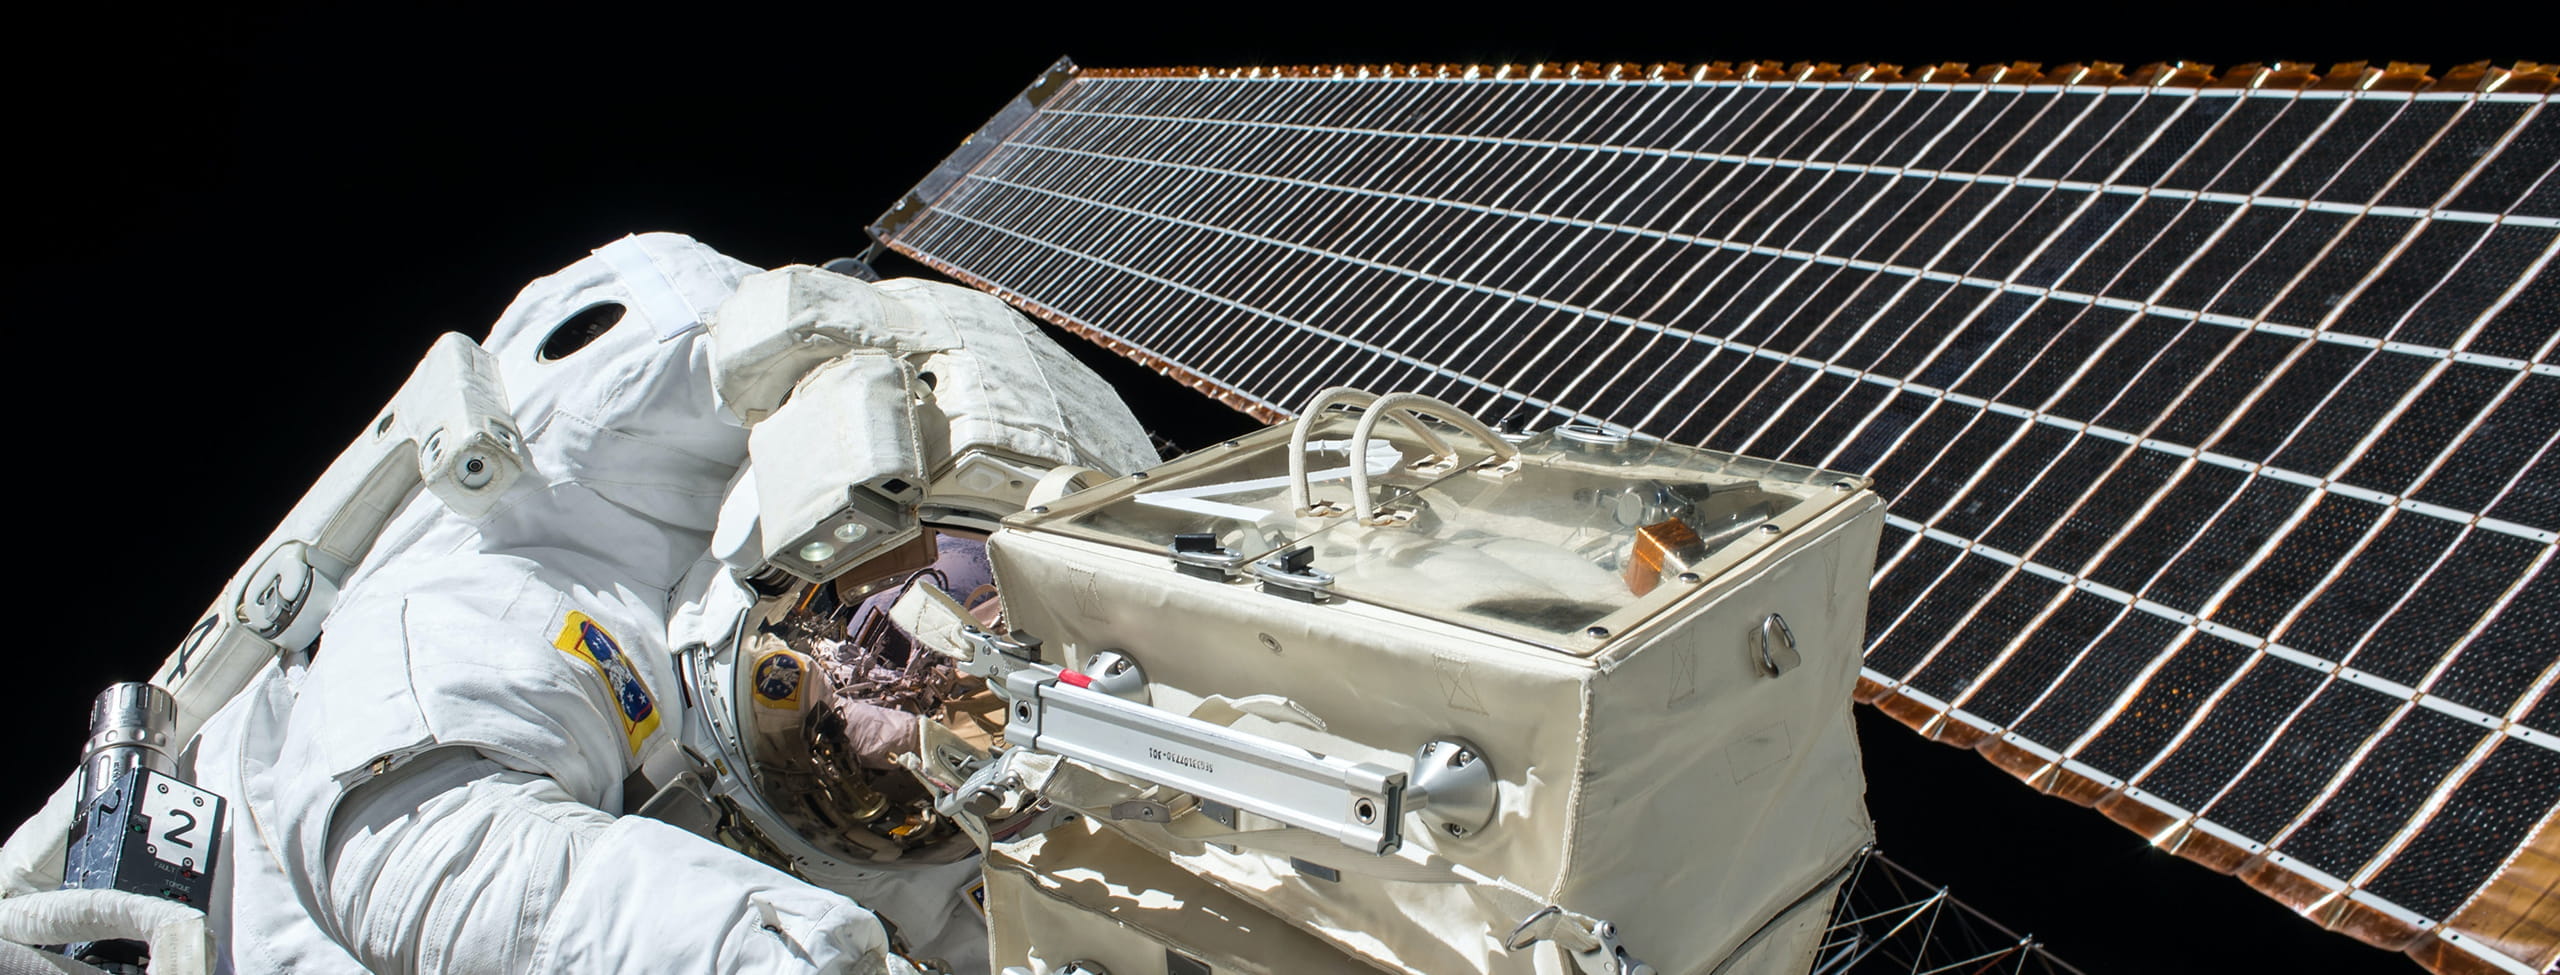 NASA astronaut working on space satellite